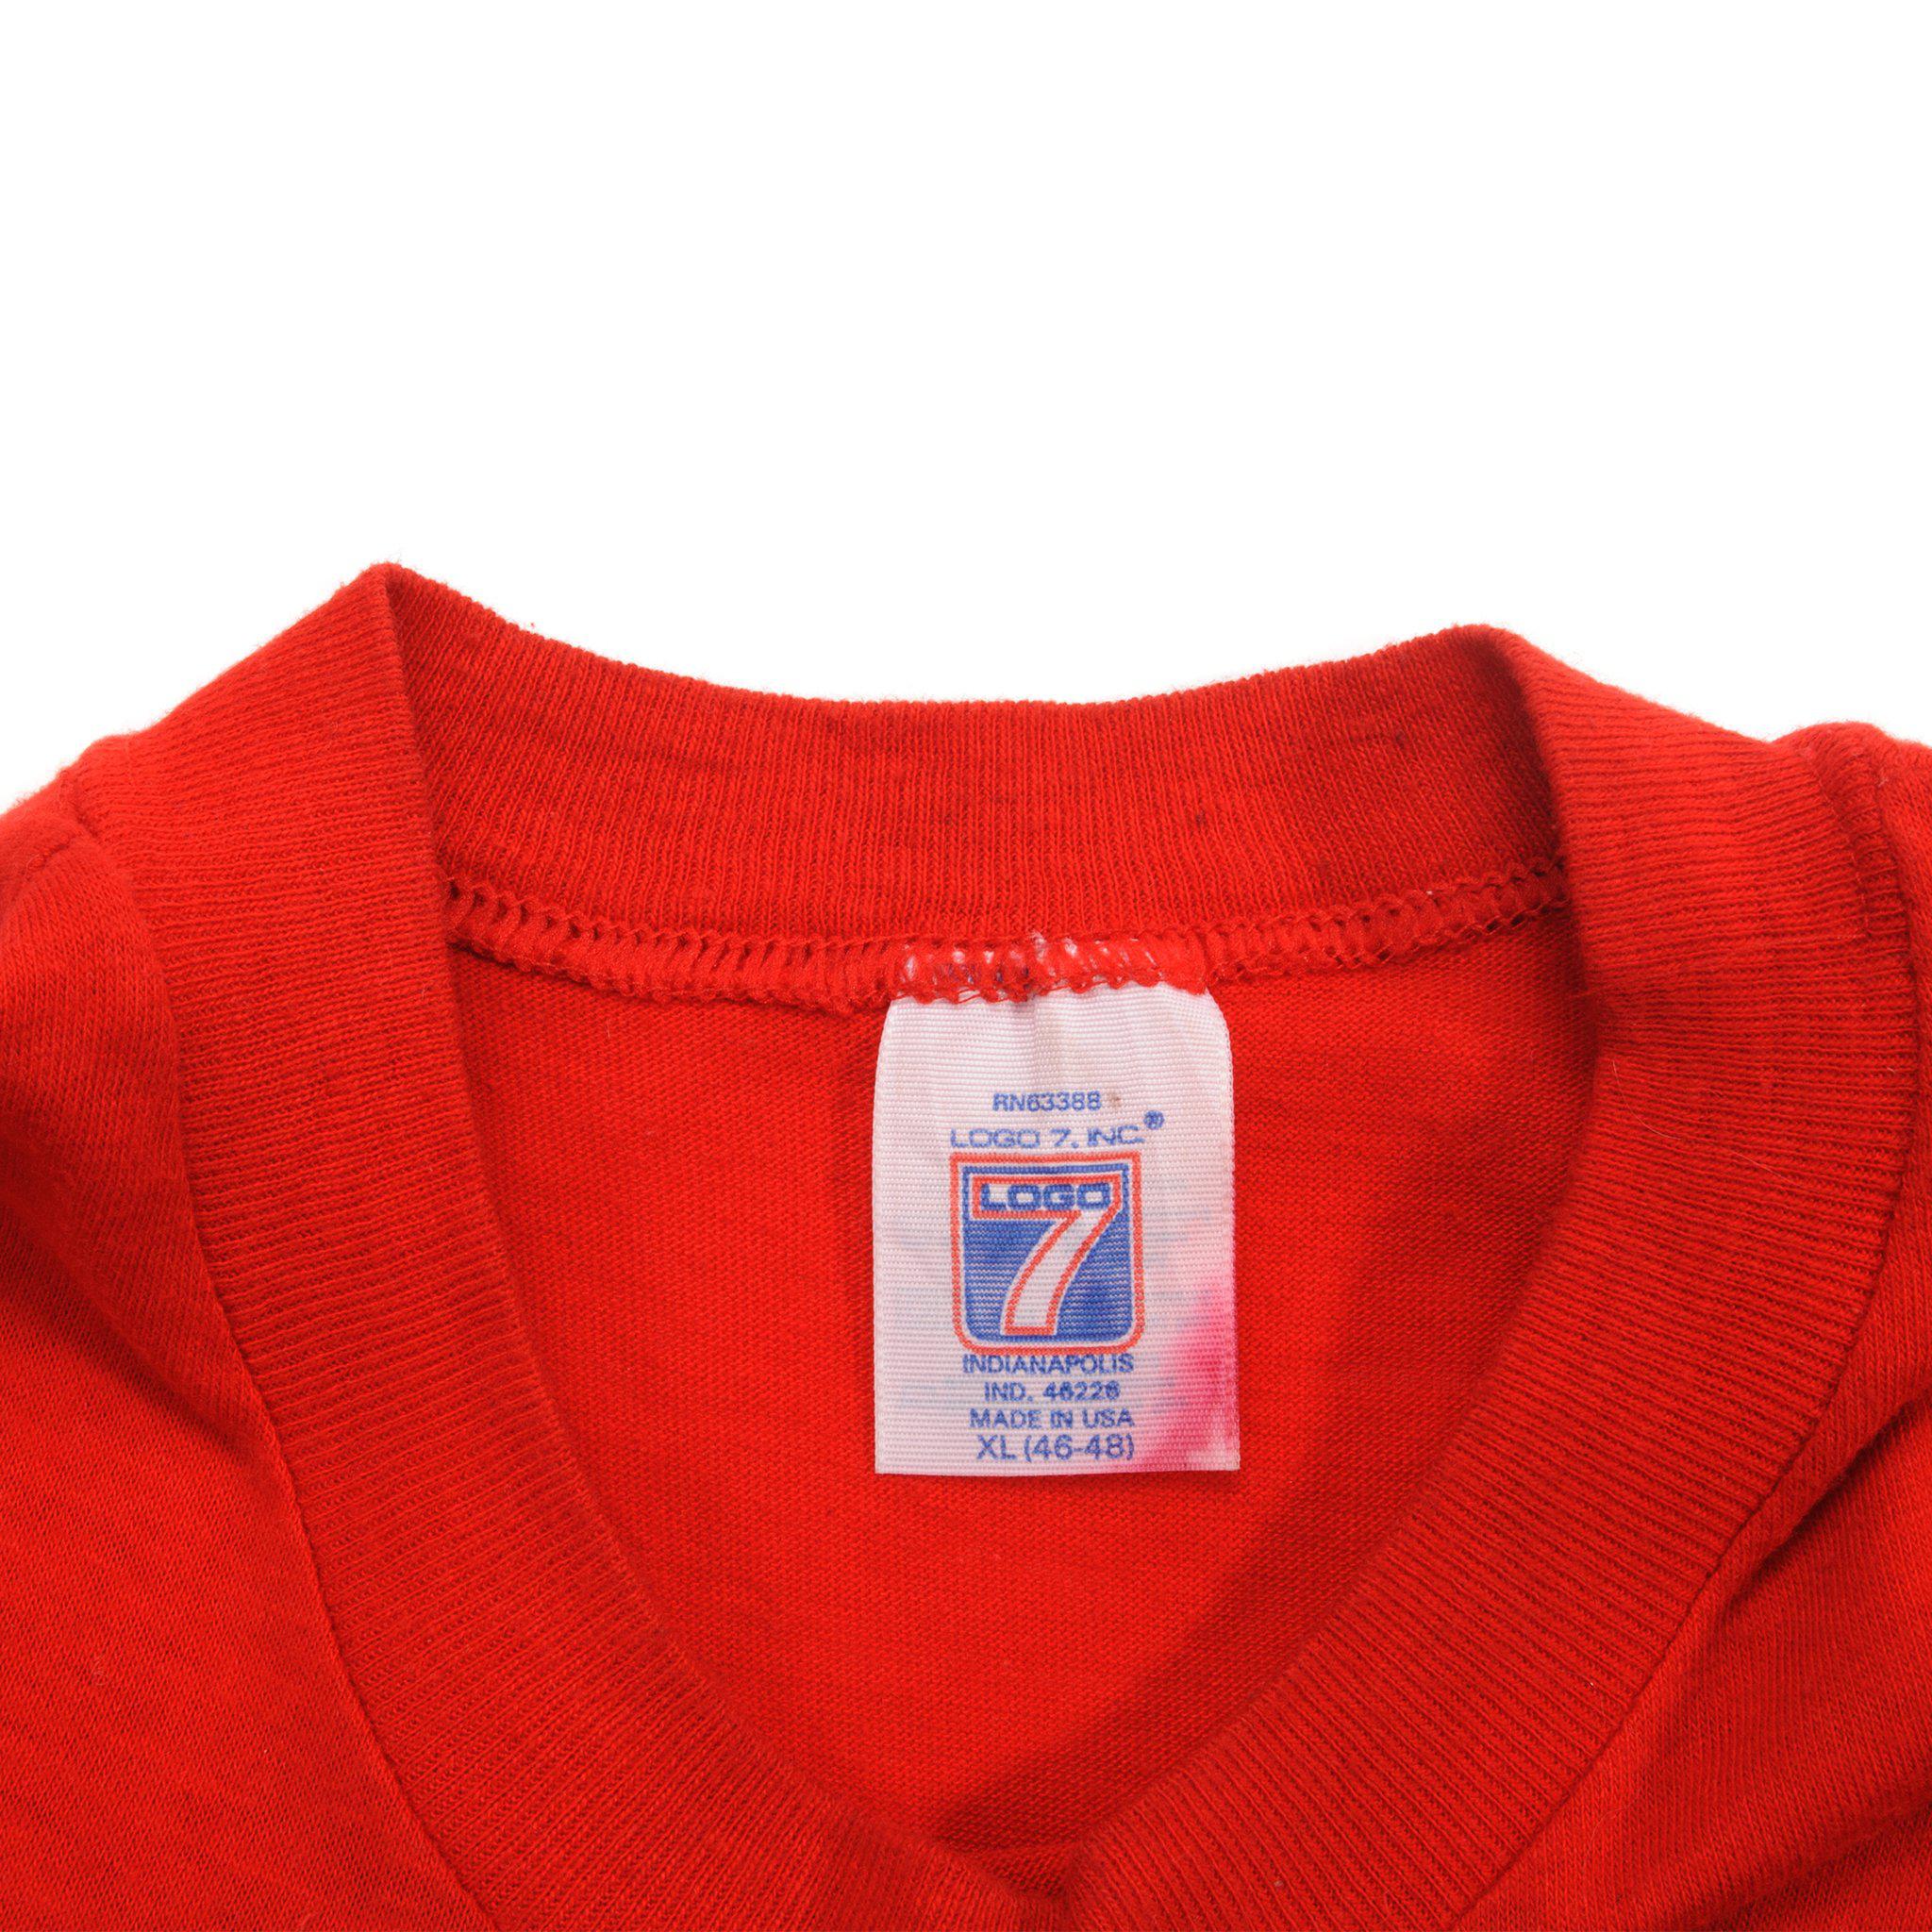 Vintage 80s St Louis Cardinals Baseball MLB Red T Shirt Size